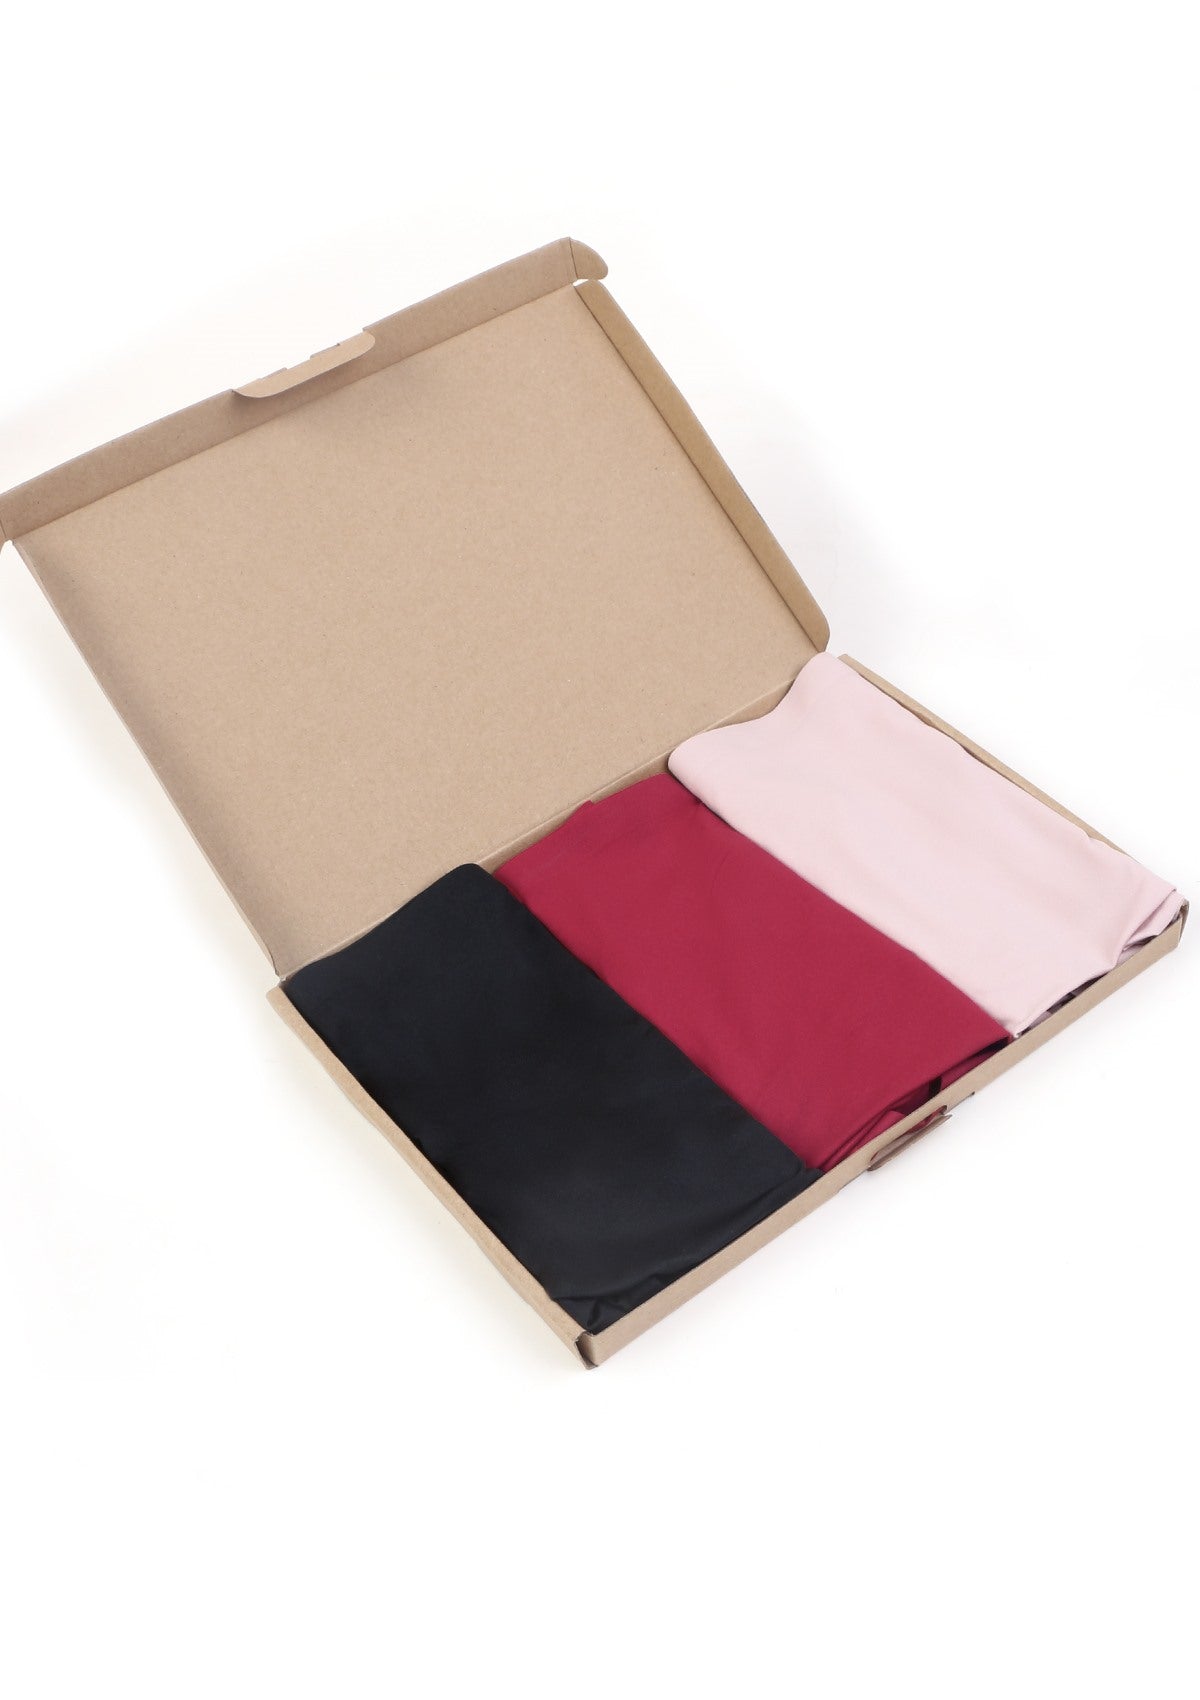 HSIA CoolFit Soft Stretch Seamless Brief Underwear Bundle - 10 Packs/$35 / ②(L-3XL) / 2*Black+2*Gray+Red